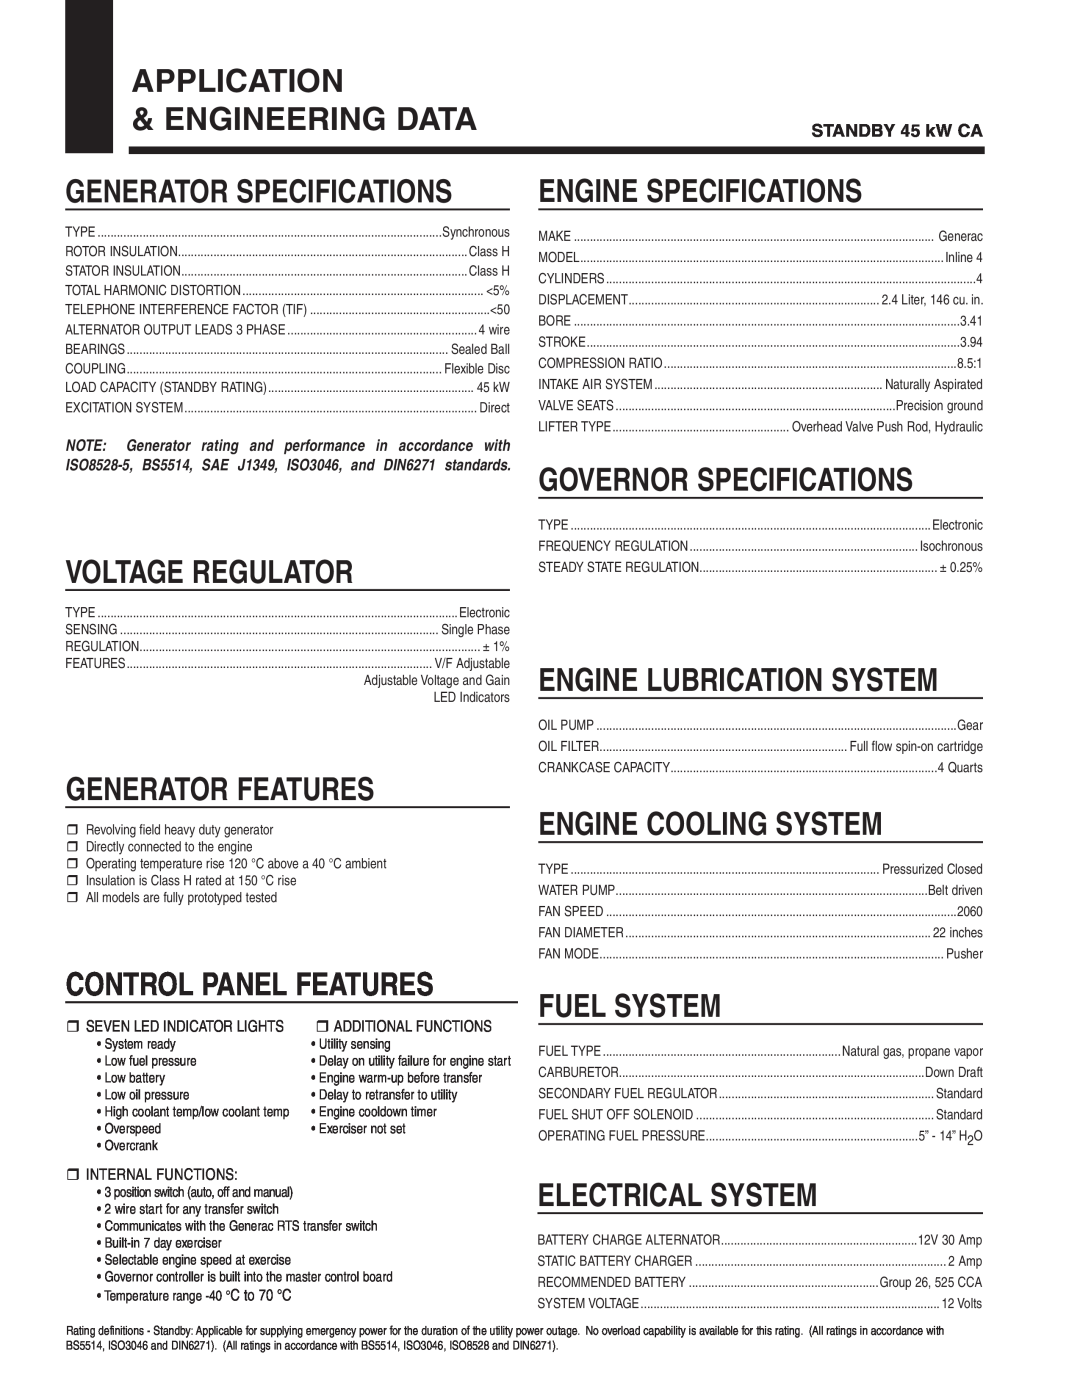 Generac Power Systems 5340 manual Application & Engineering Data 